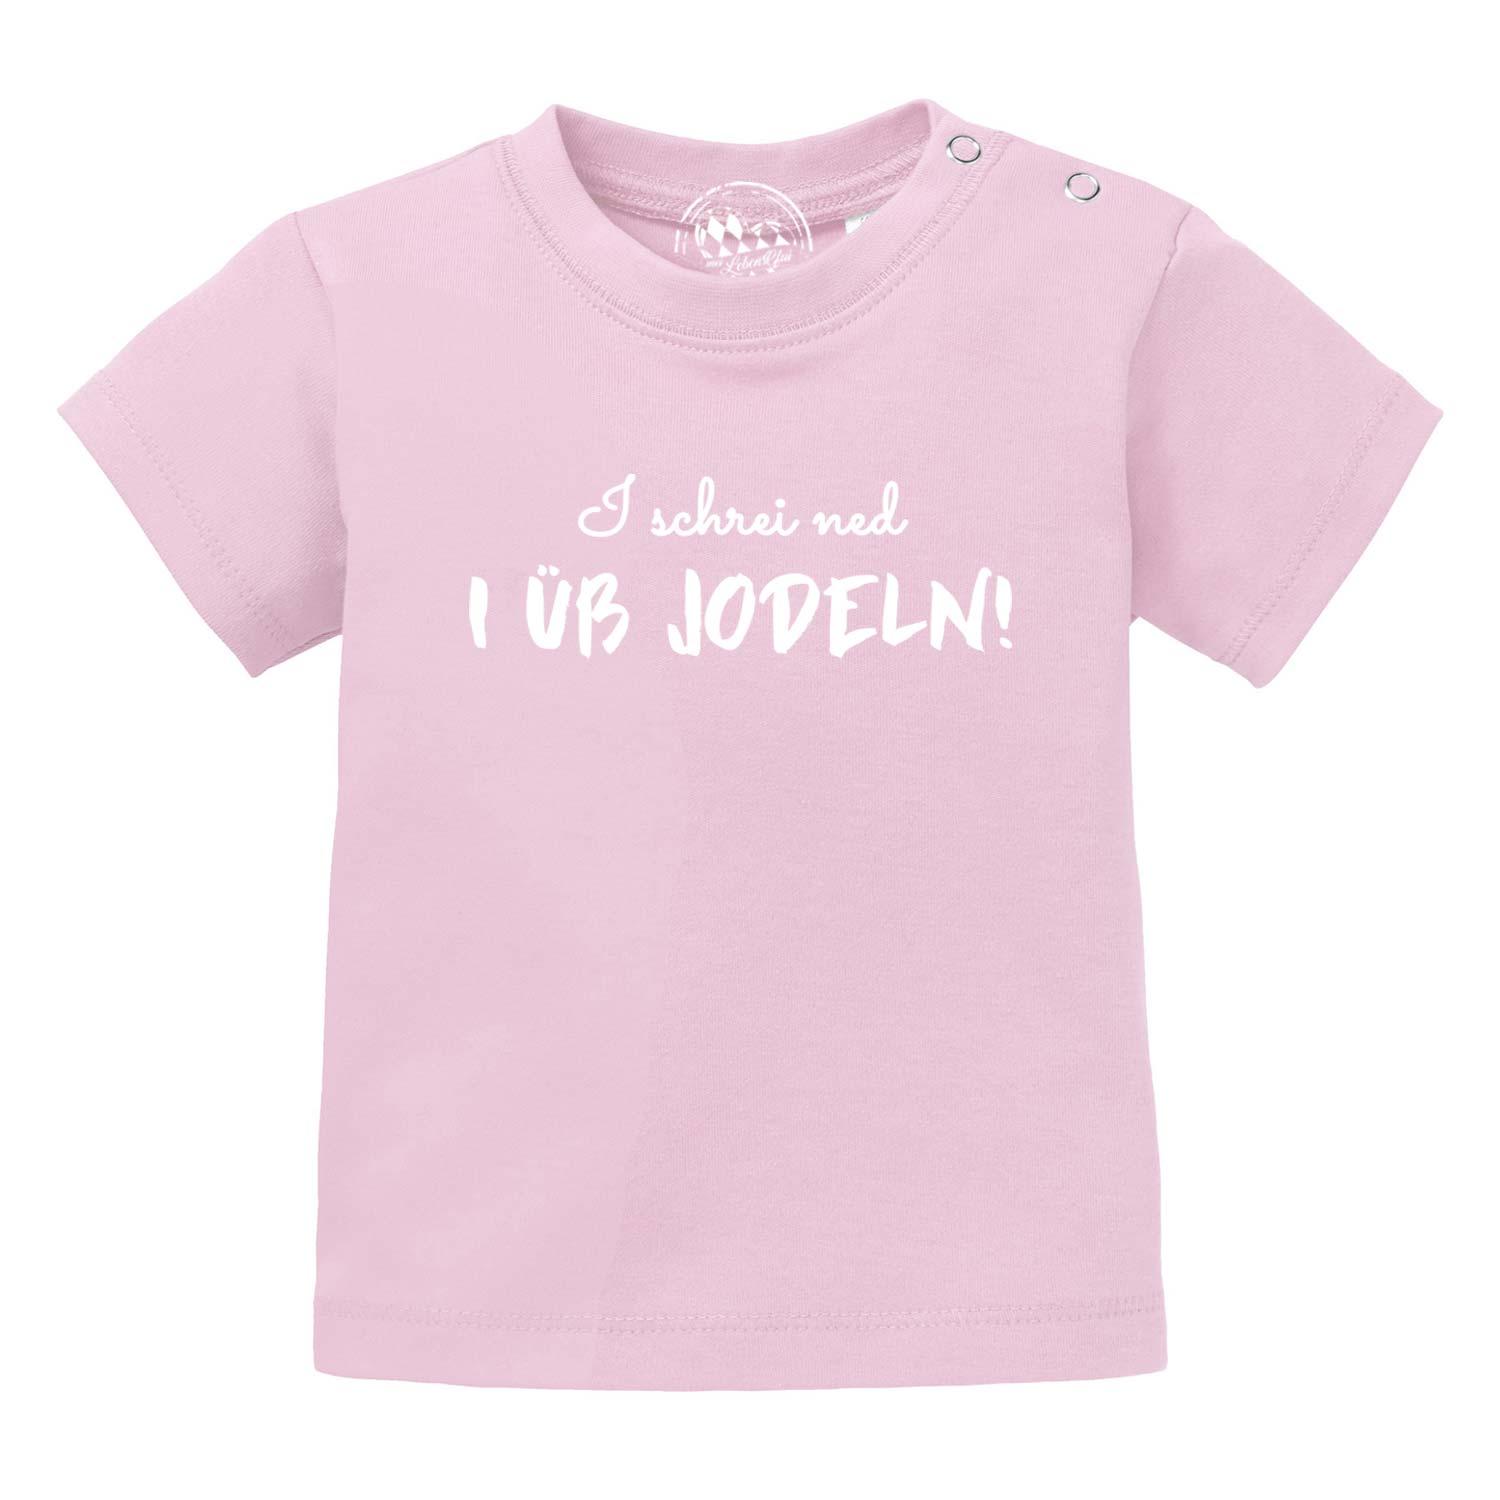 Baby T-Shirt "I üb jodeln" - bavariashop - mei LebensGfui